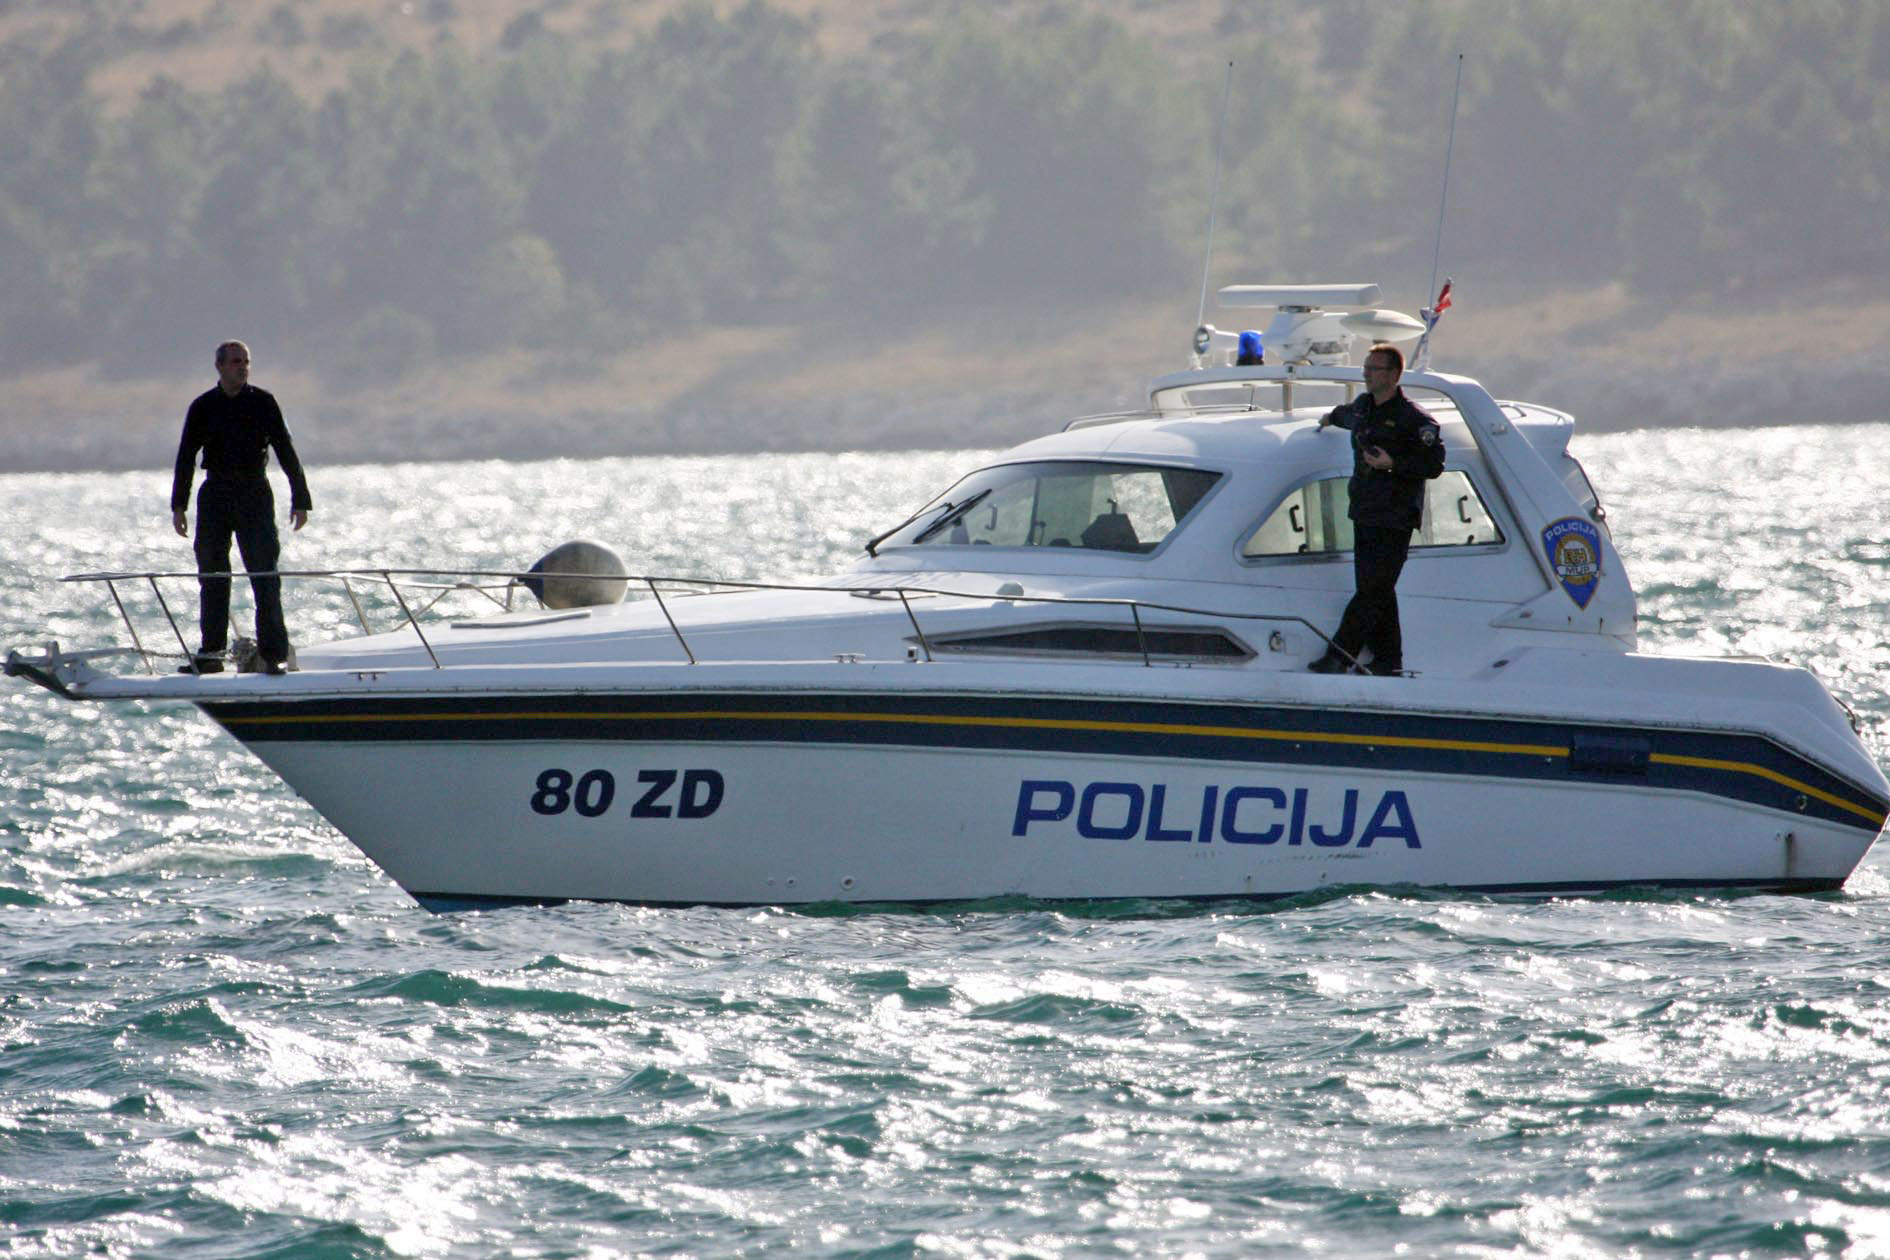 Posedarje, 29.10.2008 - Zadarskoj policiji jutros je prijavljen nestanak 48-godinjeg ribara Zorana Æ. iz Posedarja. Ribar se sinoæ zaputio na more vlastitim gumenim brodom. Kako se nije vratio, nestanak je jutros prijavio njegov brat. Ubrzo je pronaðen gumeni brod uz oblinju uvalu u mjestu, a za ribarom je nastavljena potraga.
foto FaH/ ua